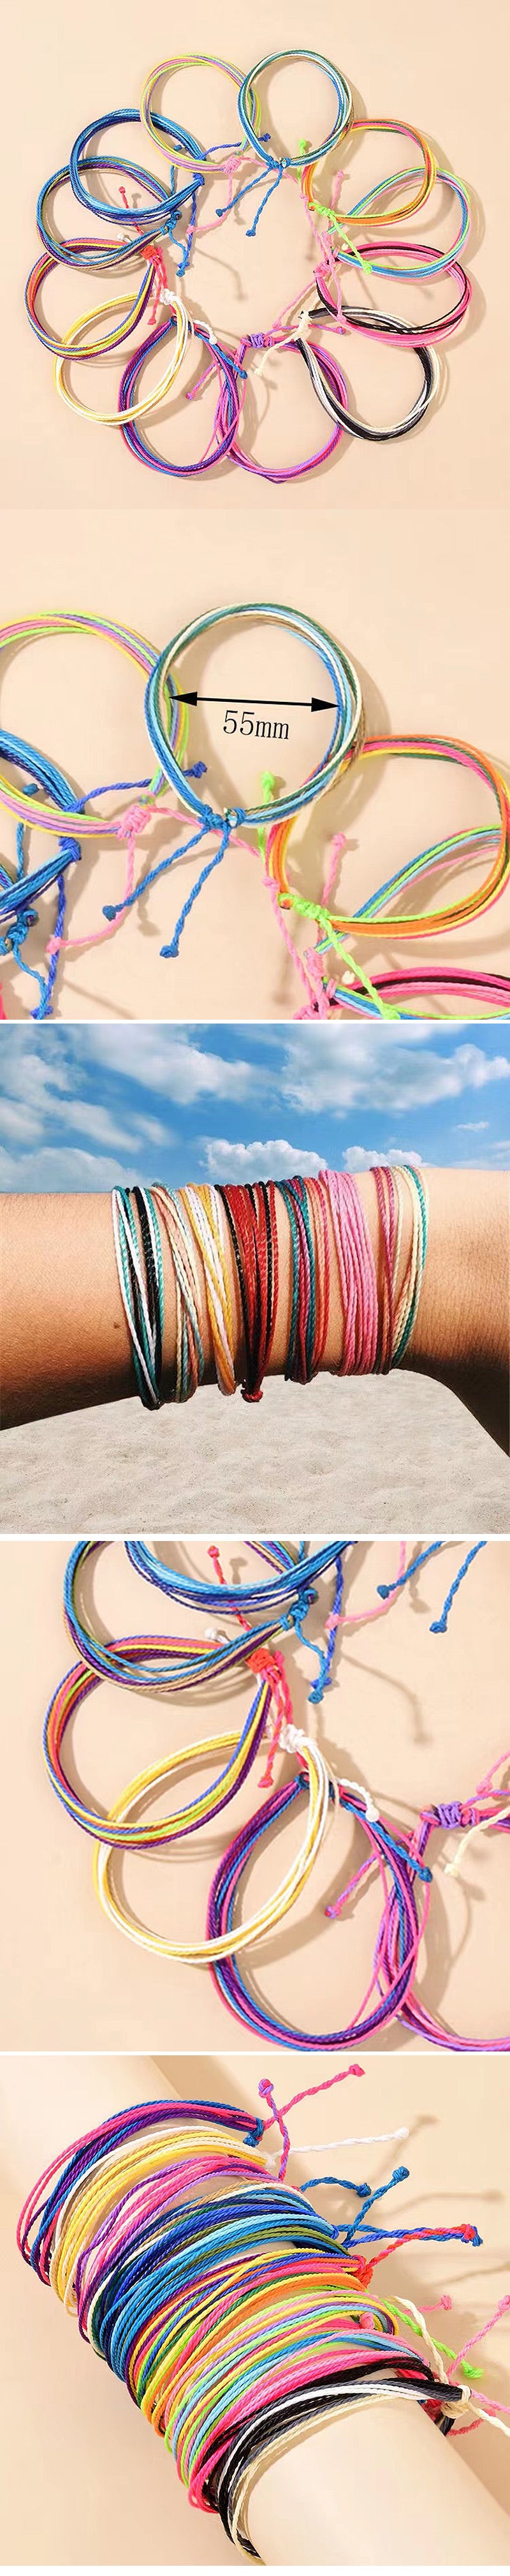 Vacation Colorful Rope Braid Unisex Bracelets